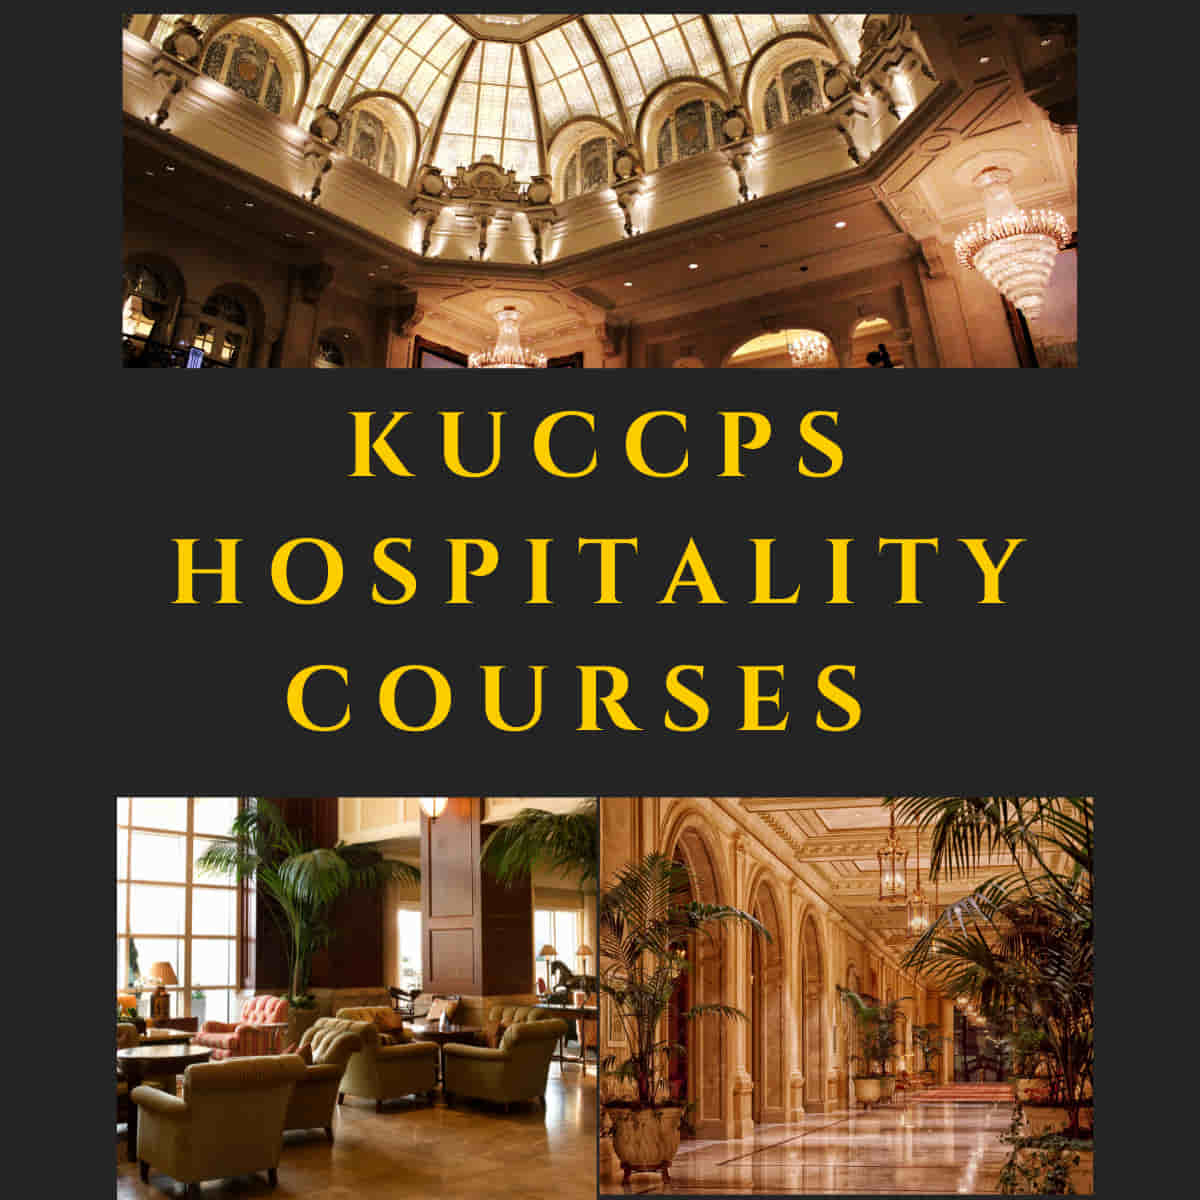 KUCCPS hospitality courses